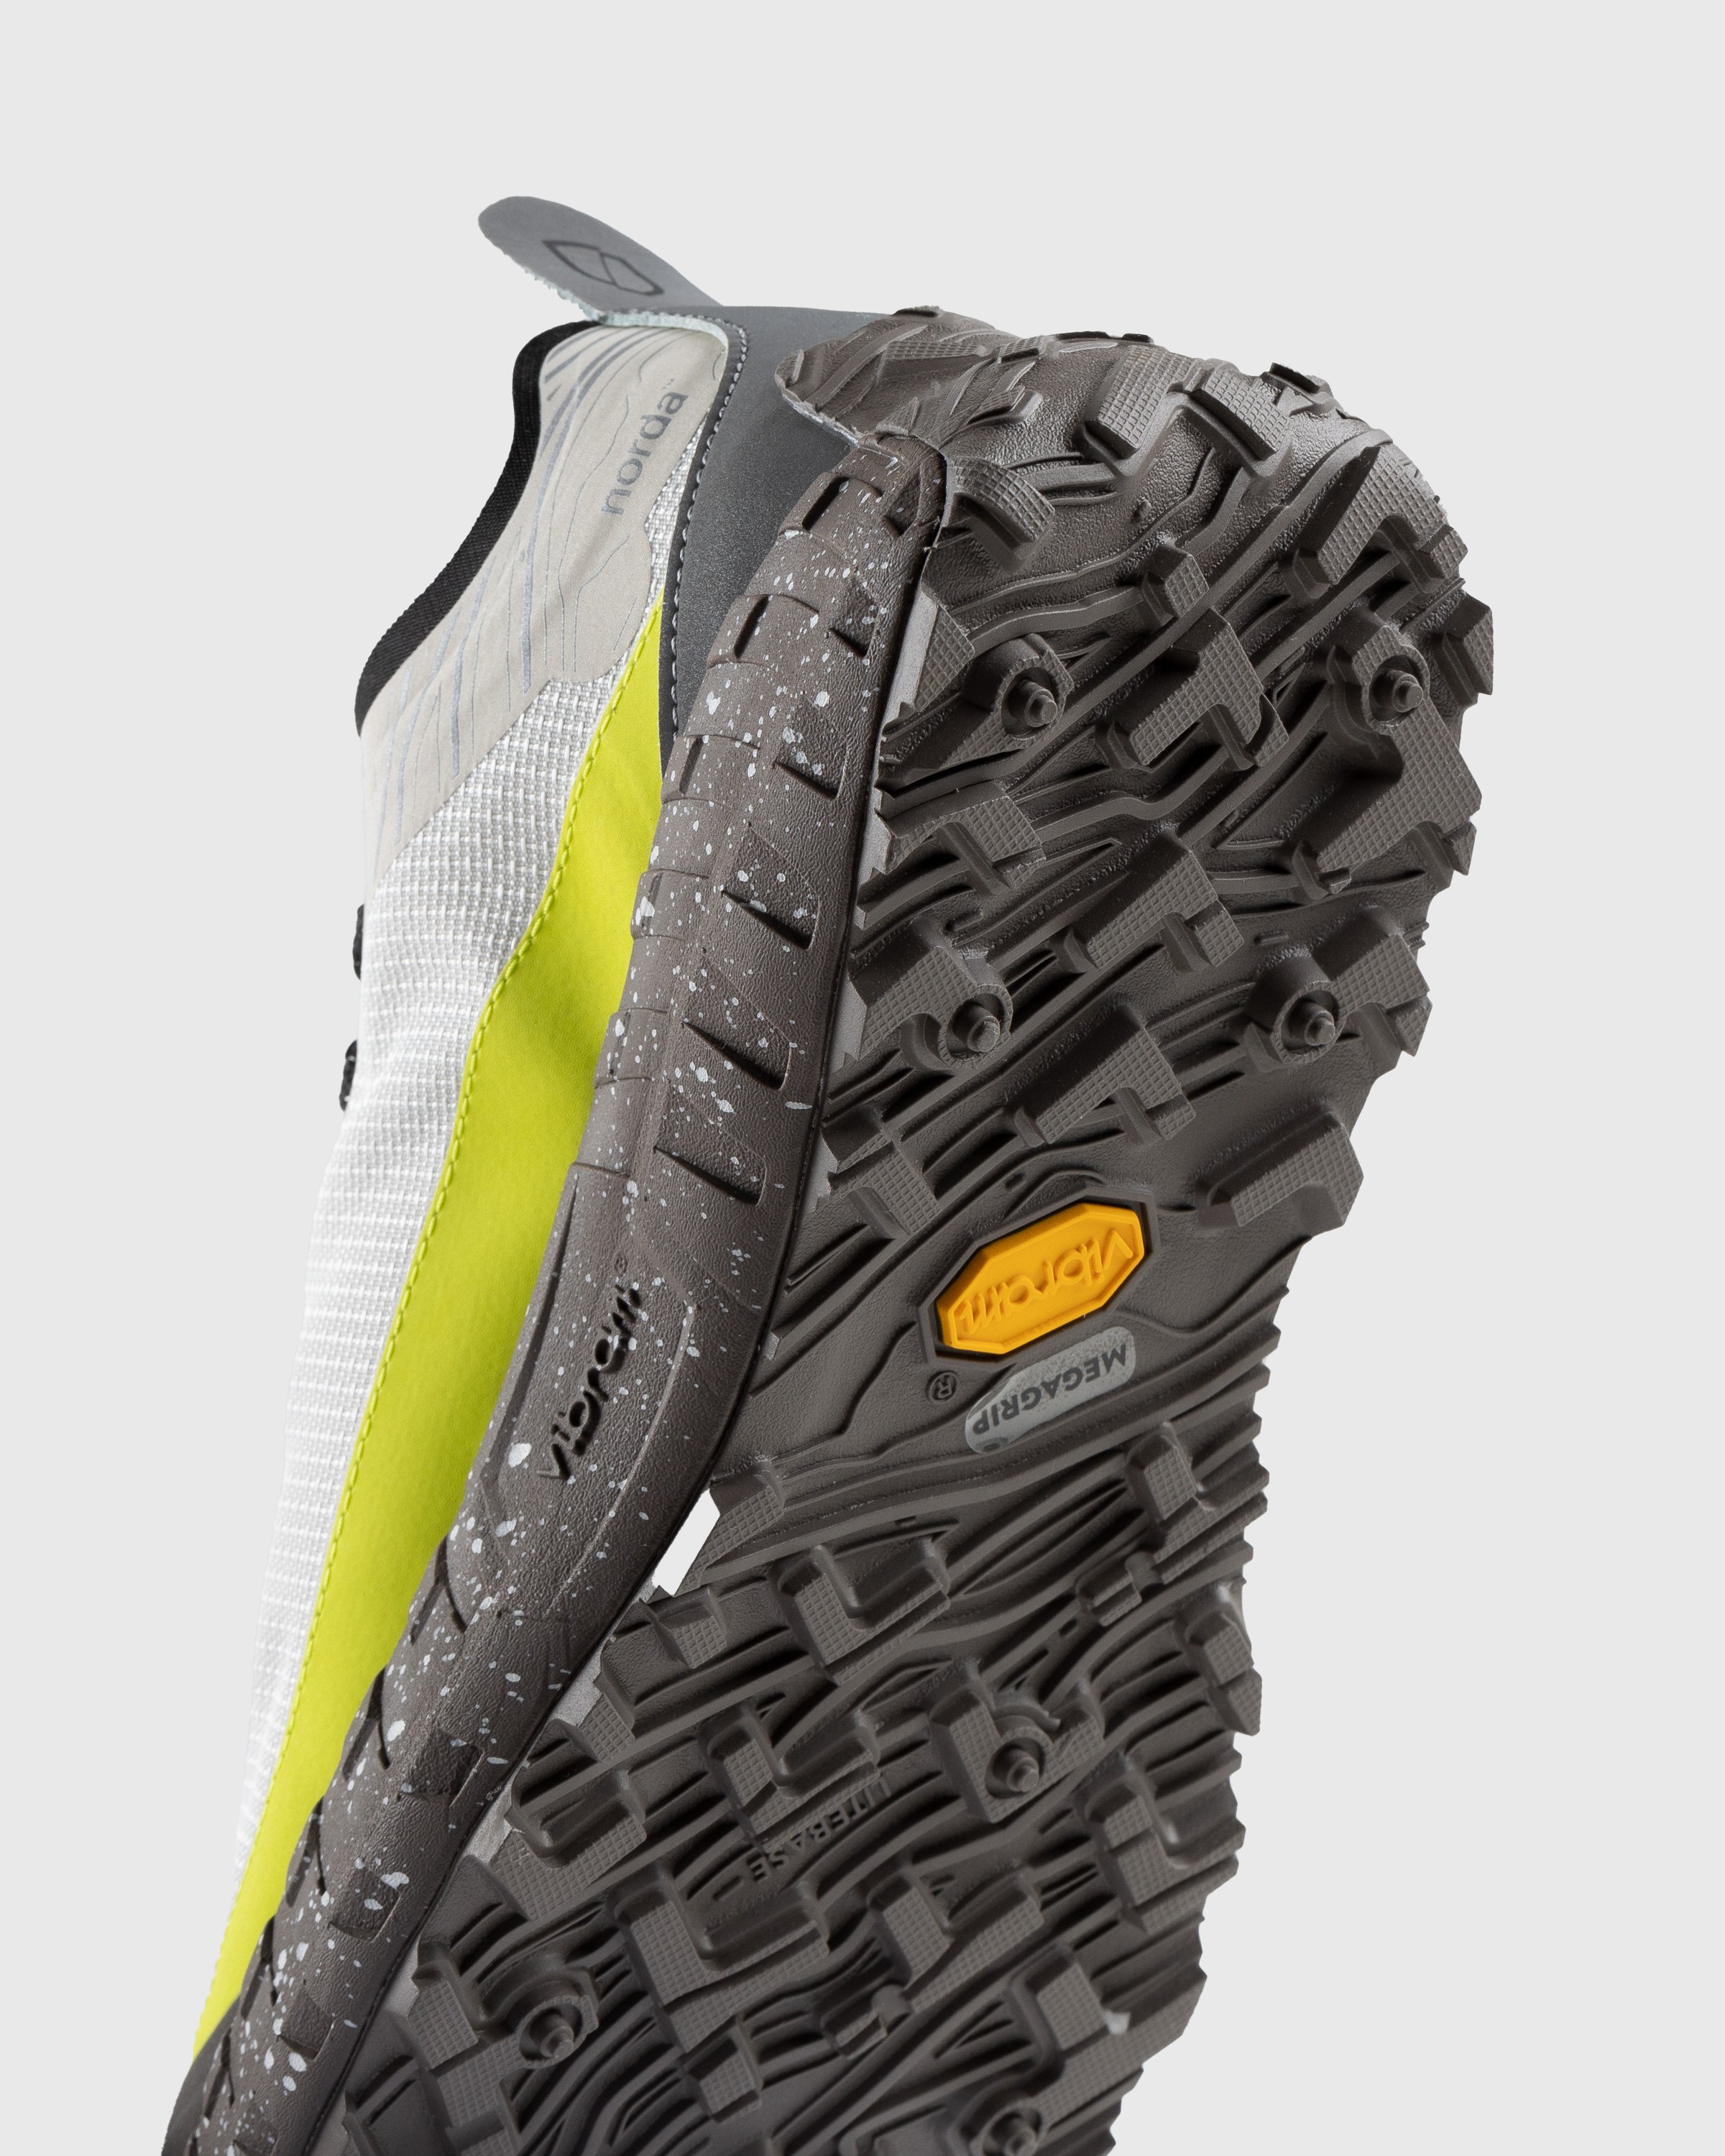 Norda - 001 M LTD Edition Icicle - Footwear - Grey - Image 6